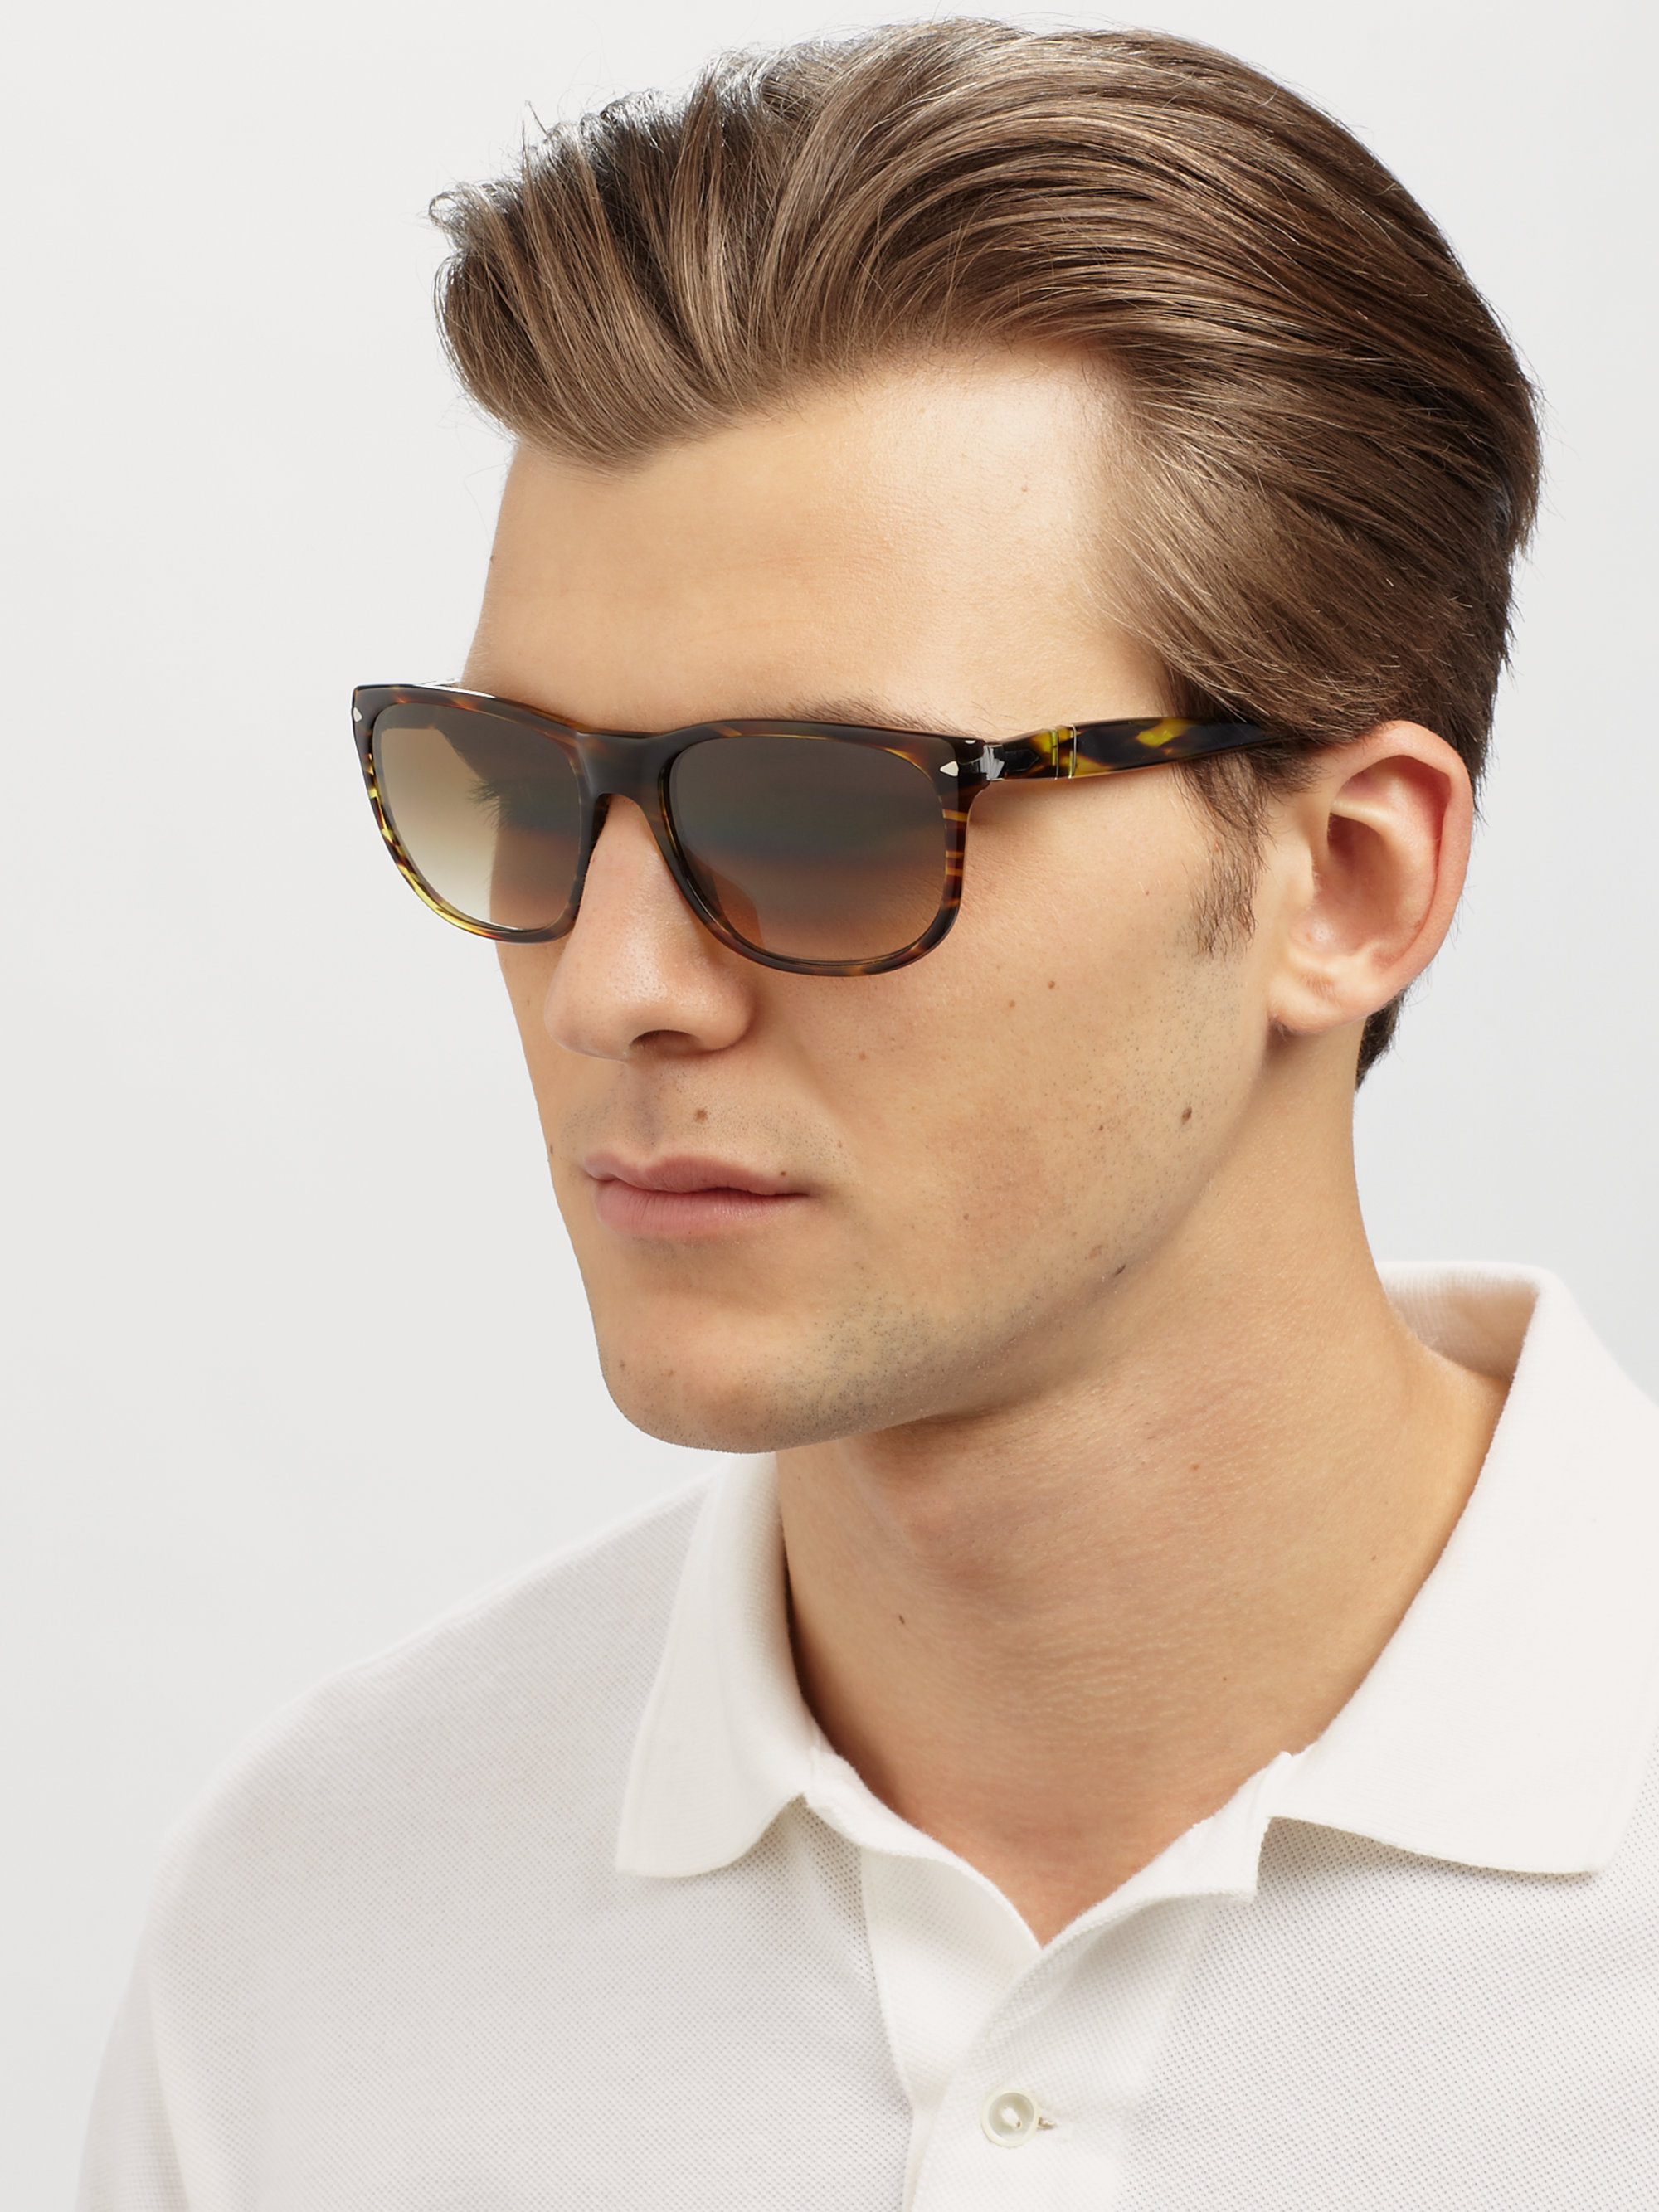 Are Wayfarer Sunglasses In Style